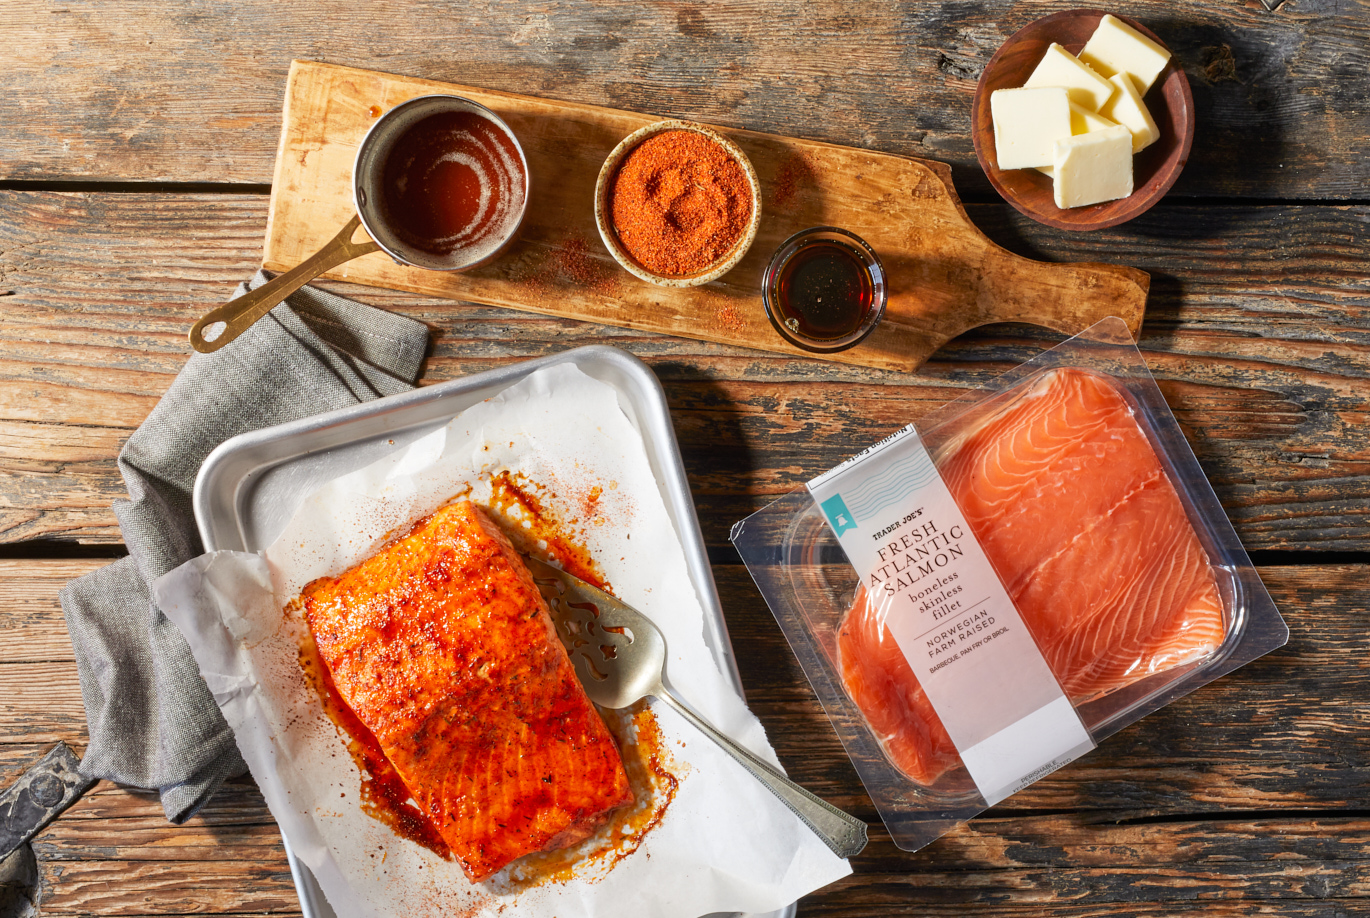 Fresh Atlantic Salmon: Enjoying Ocean-Fresh Seafood